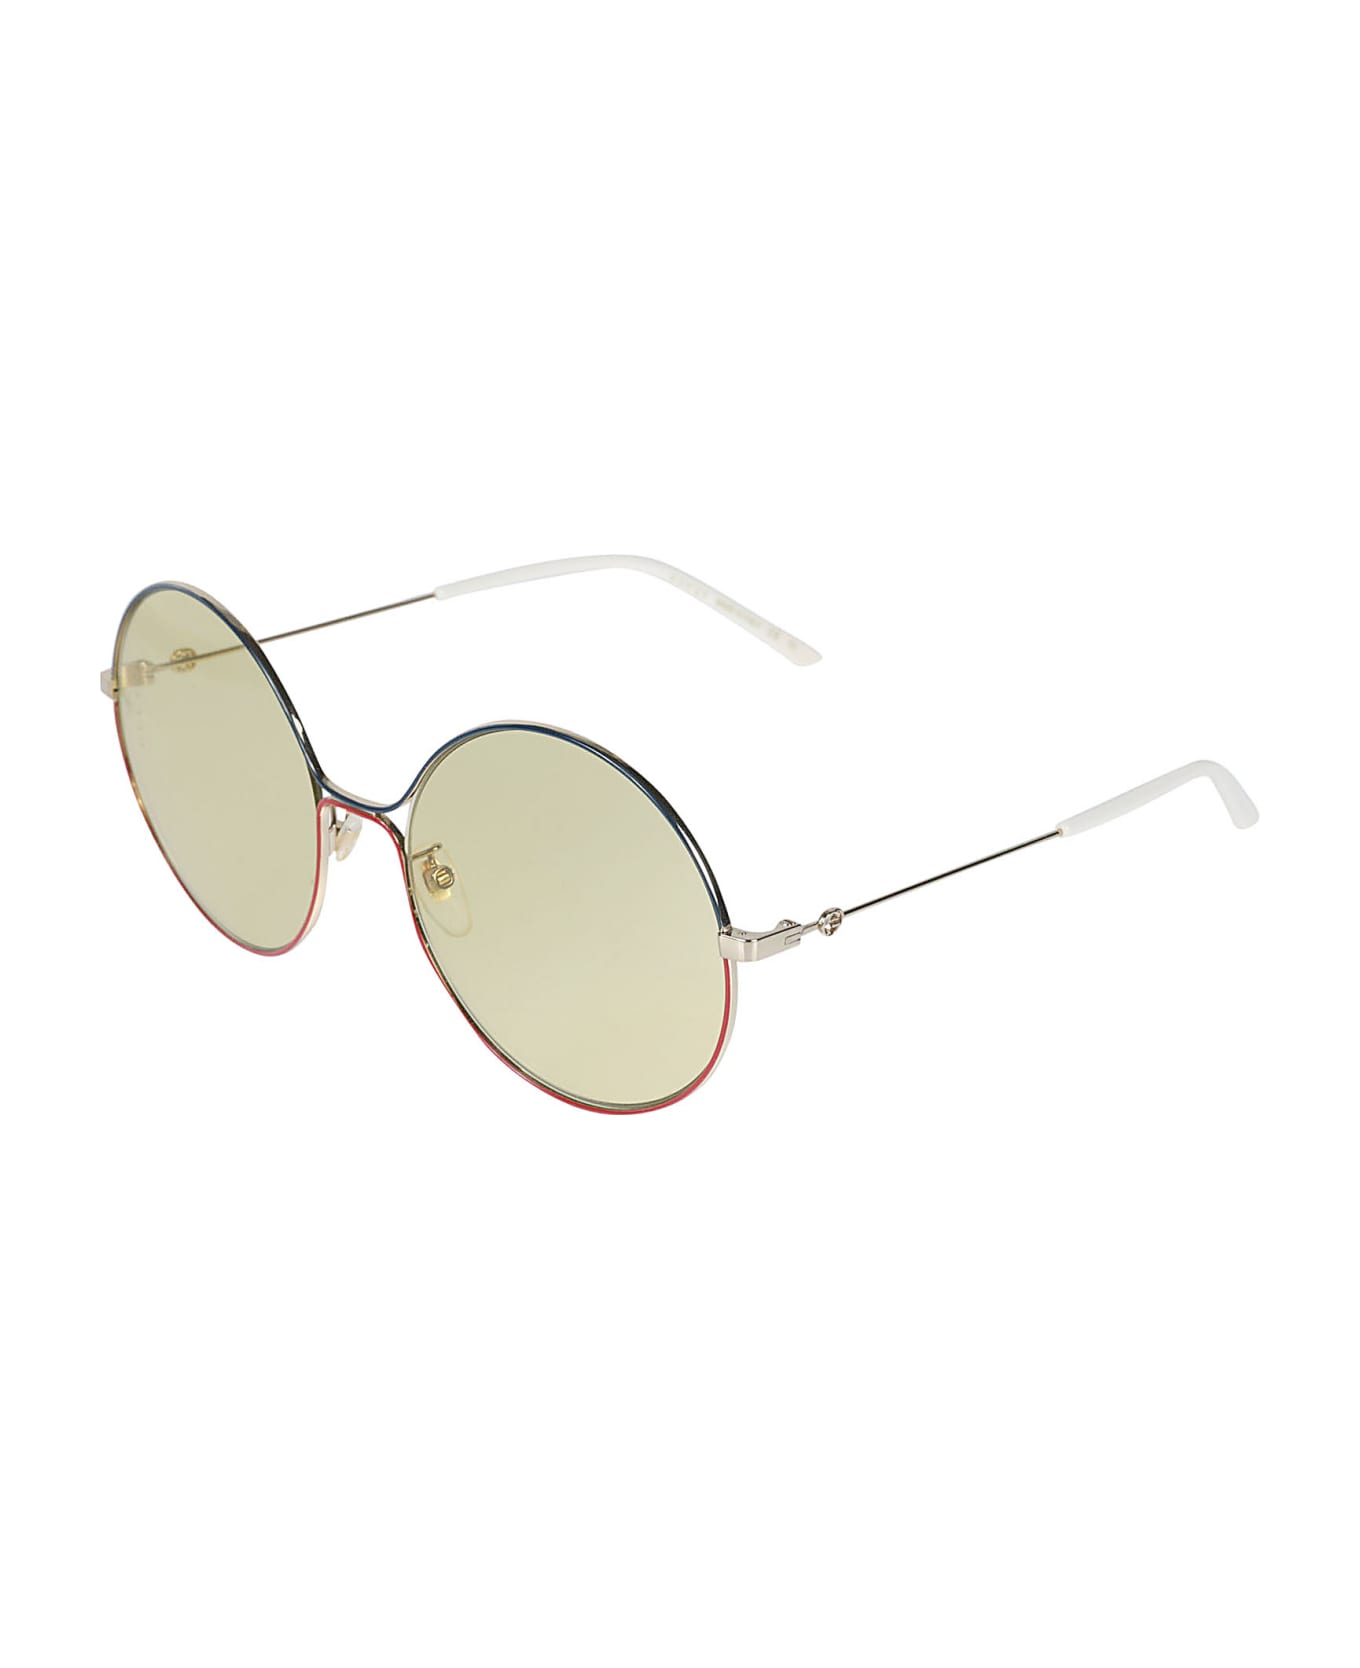 Gucci Eyewear Classic Round Sunglasses - Gold